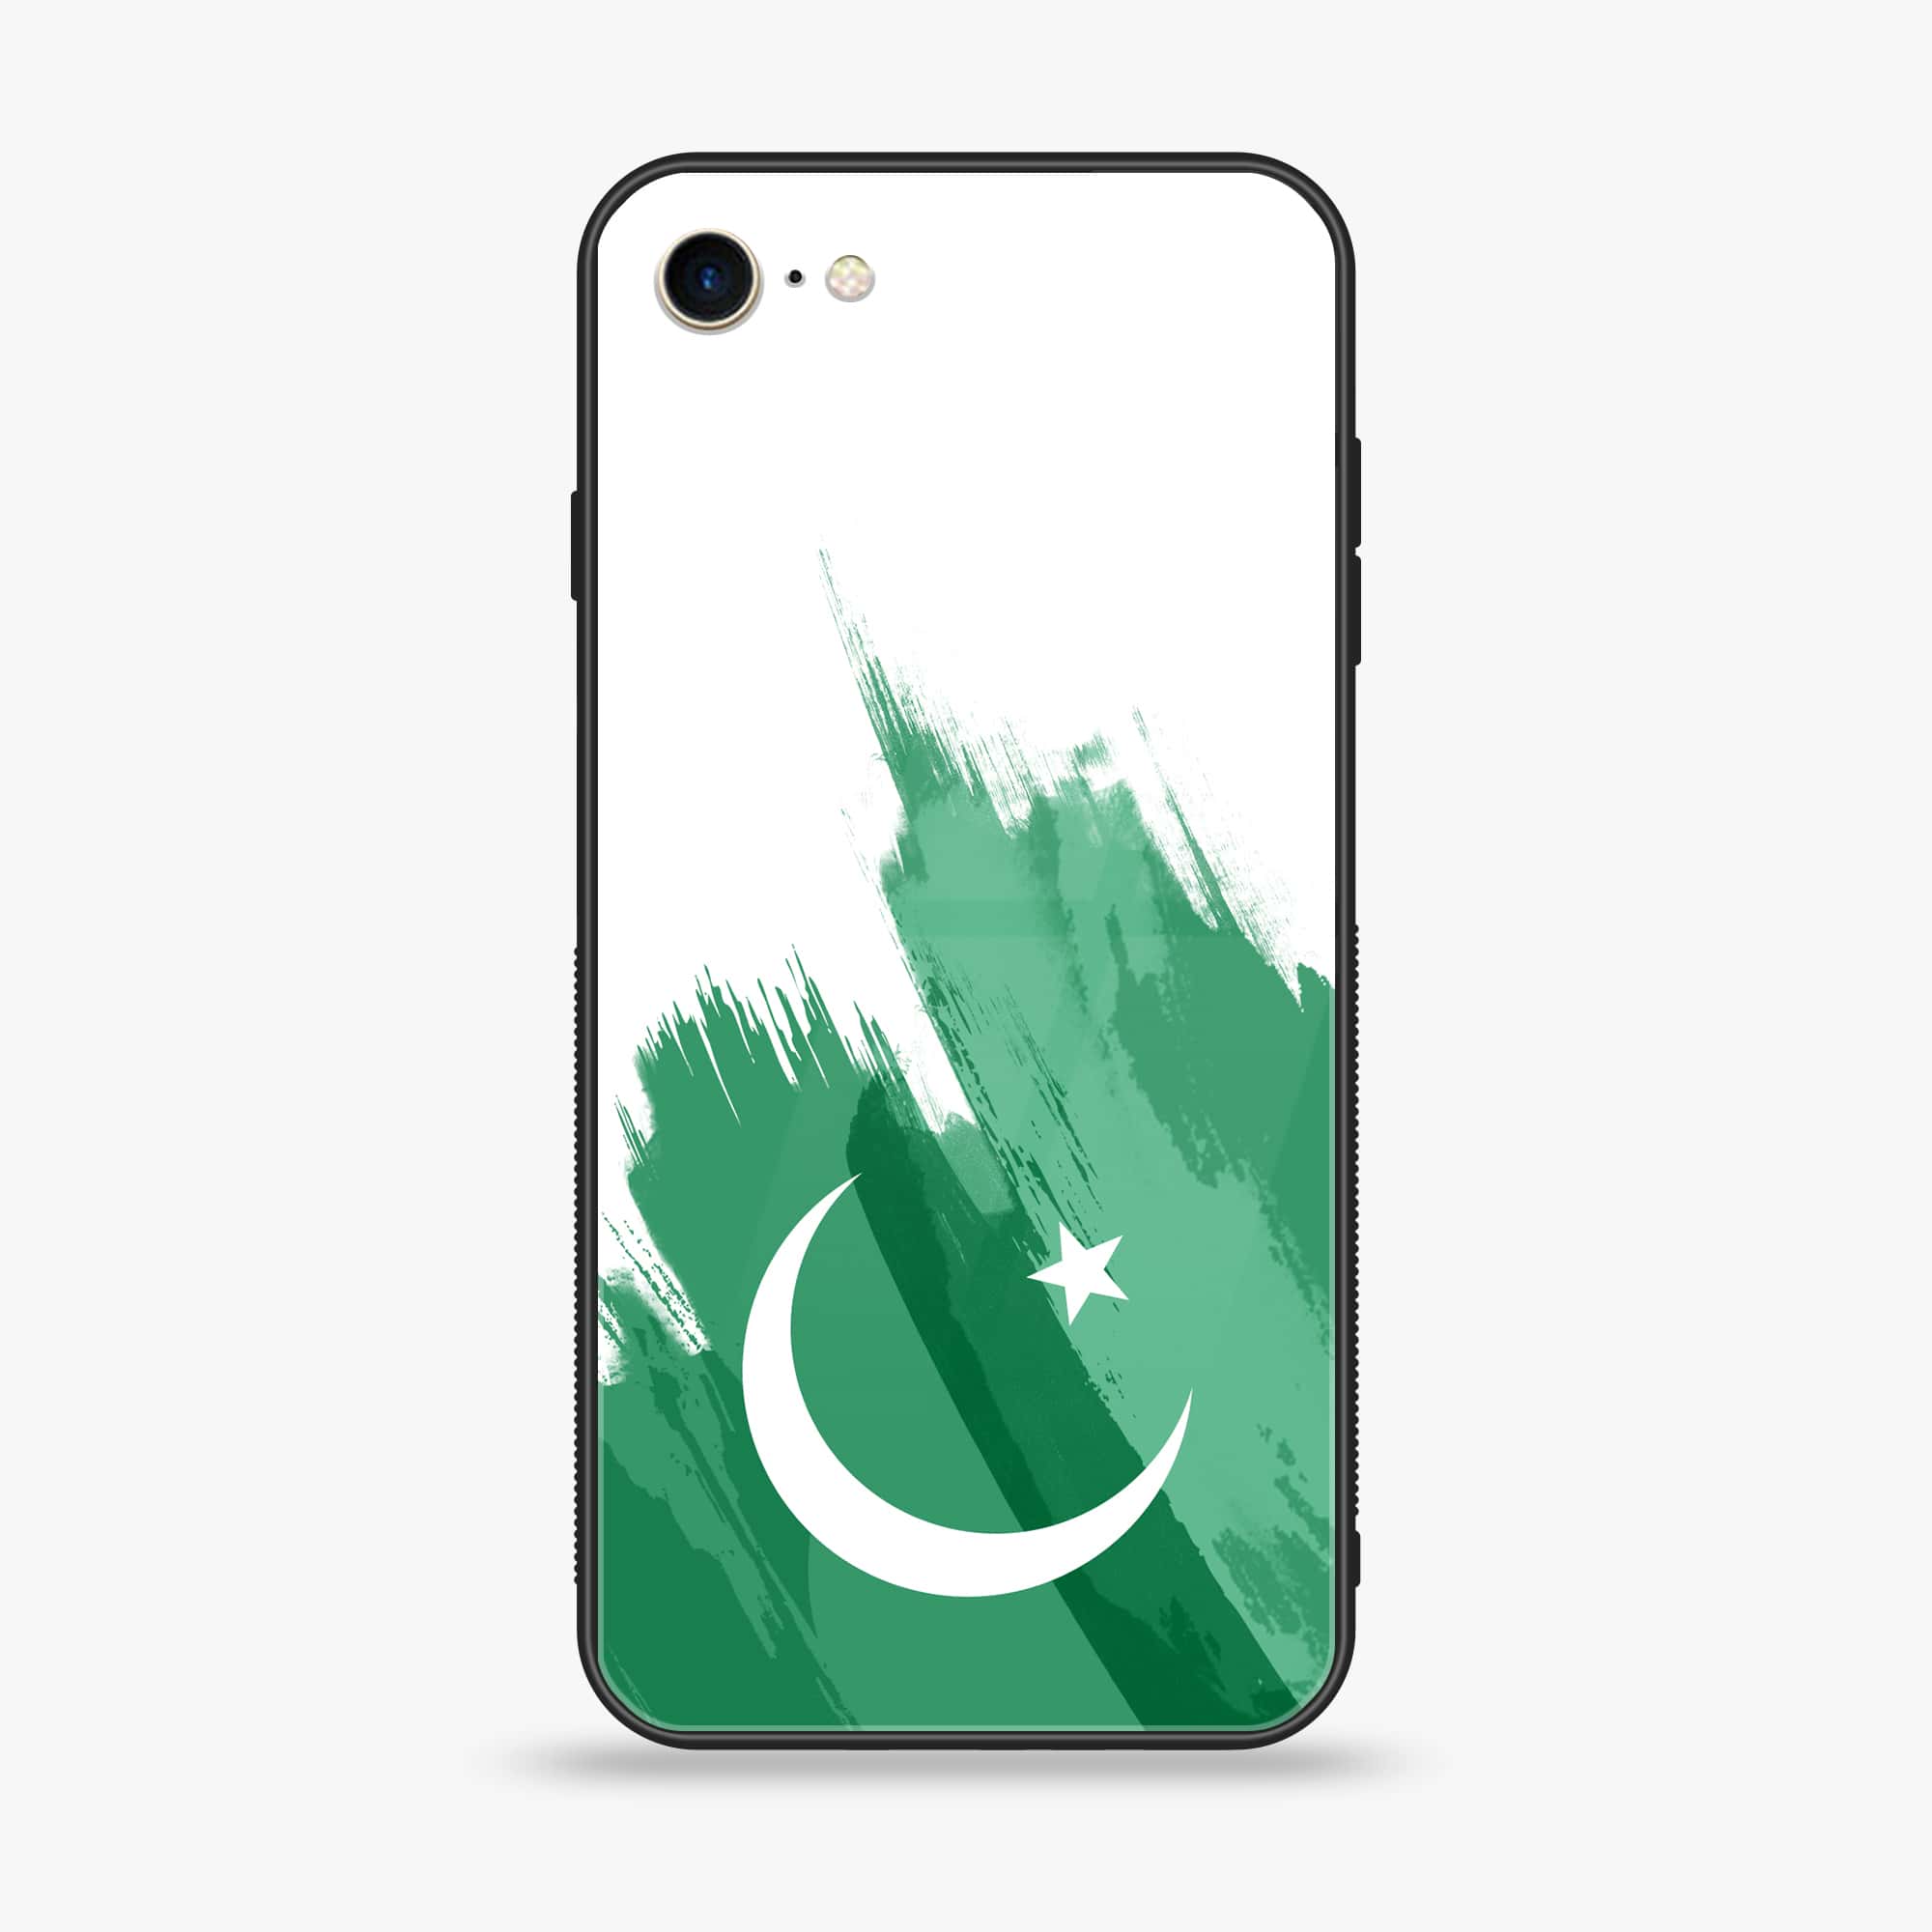 iPhone 7 - Pakistani Flag Series - Premium Printed Glass soft Bumper shock Proof Case